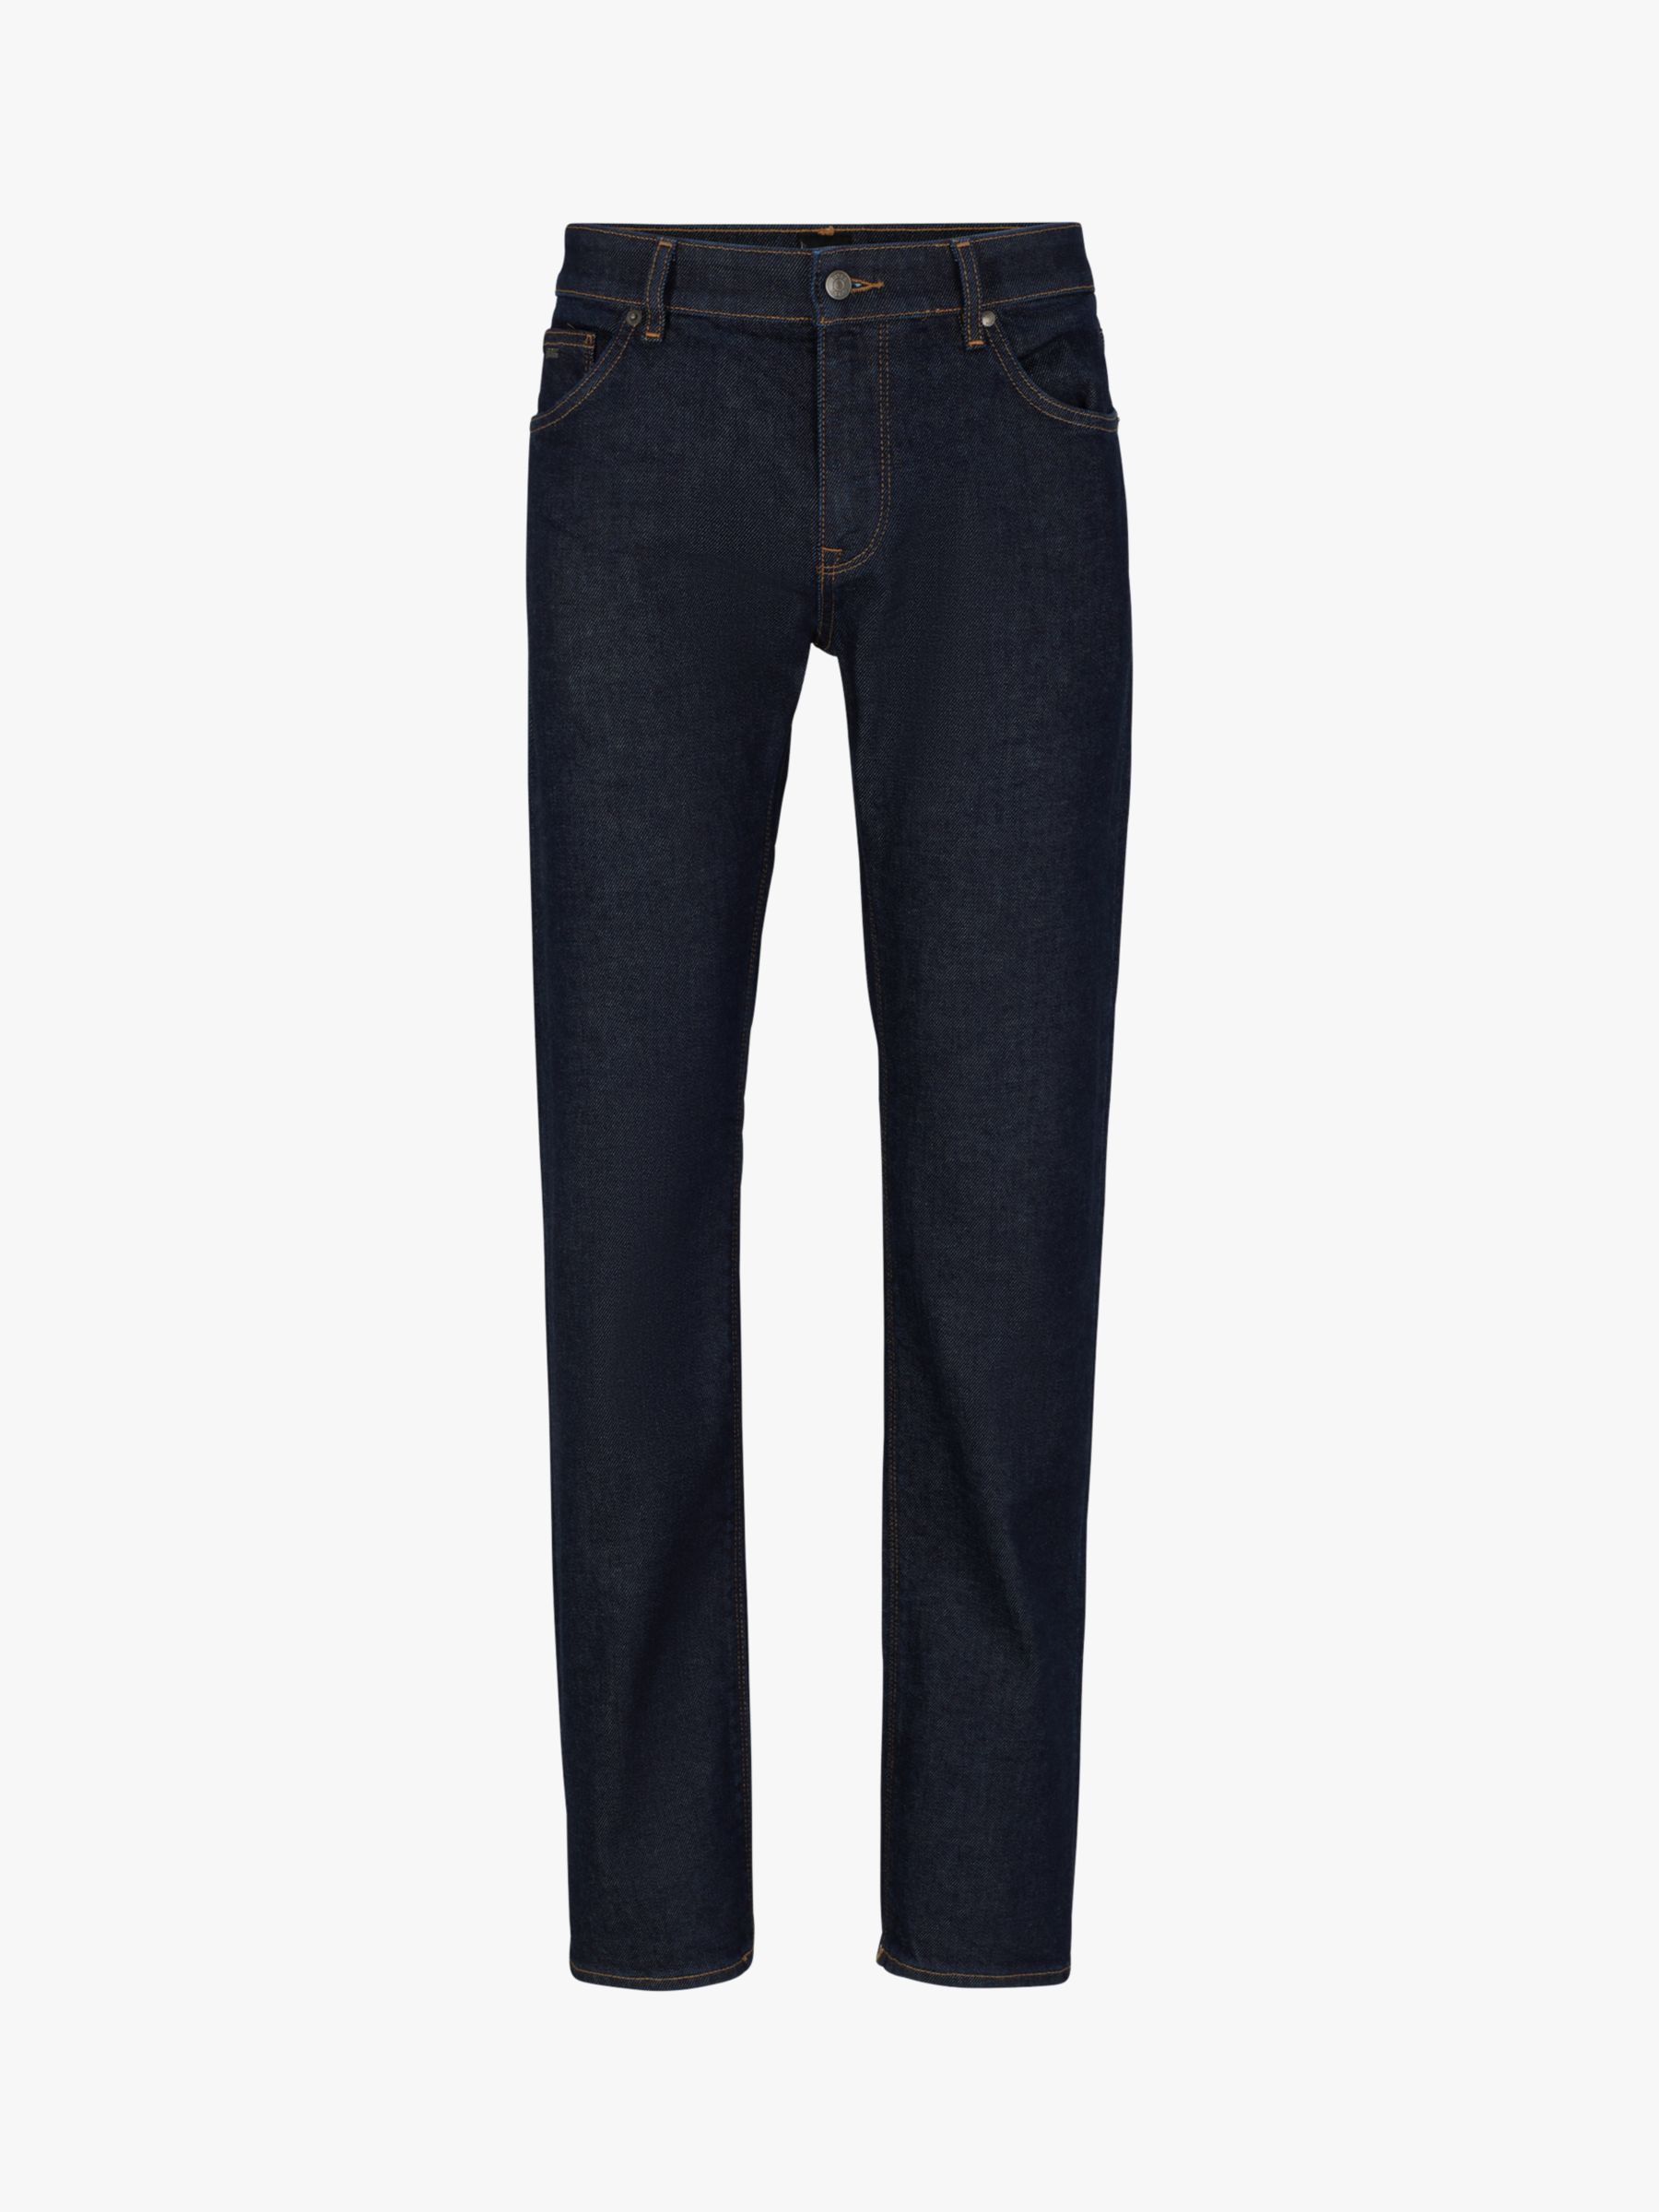 BOSS Maine Regular Fit Jeans, Navy, 33L